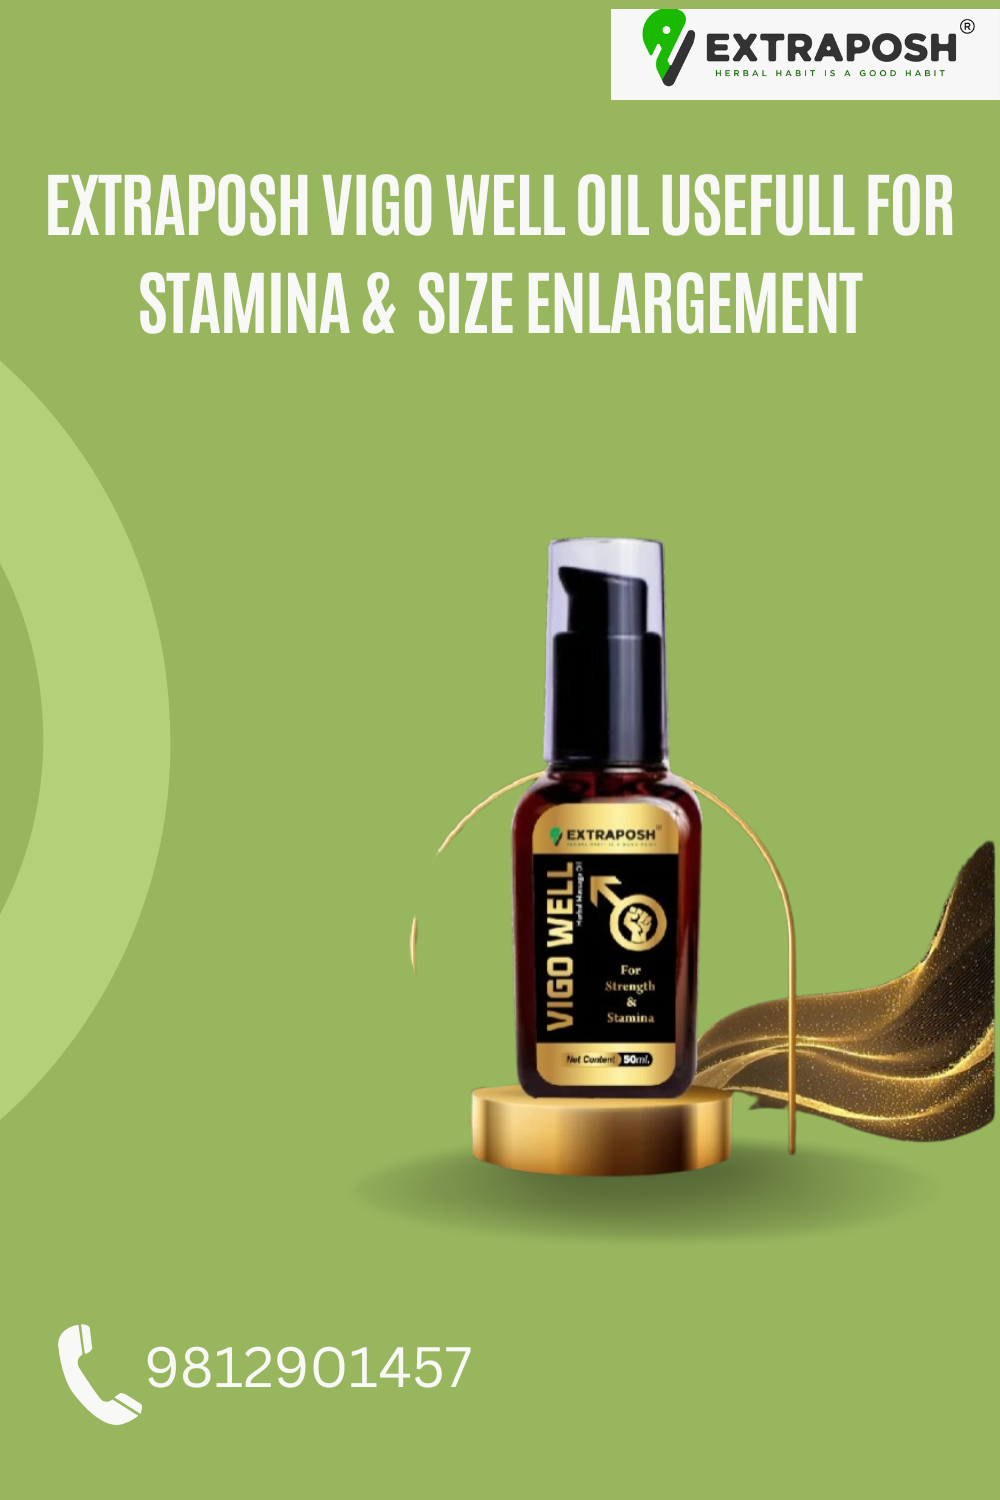 Vigo well oil herbal massage oil for stamina and enlargement